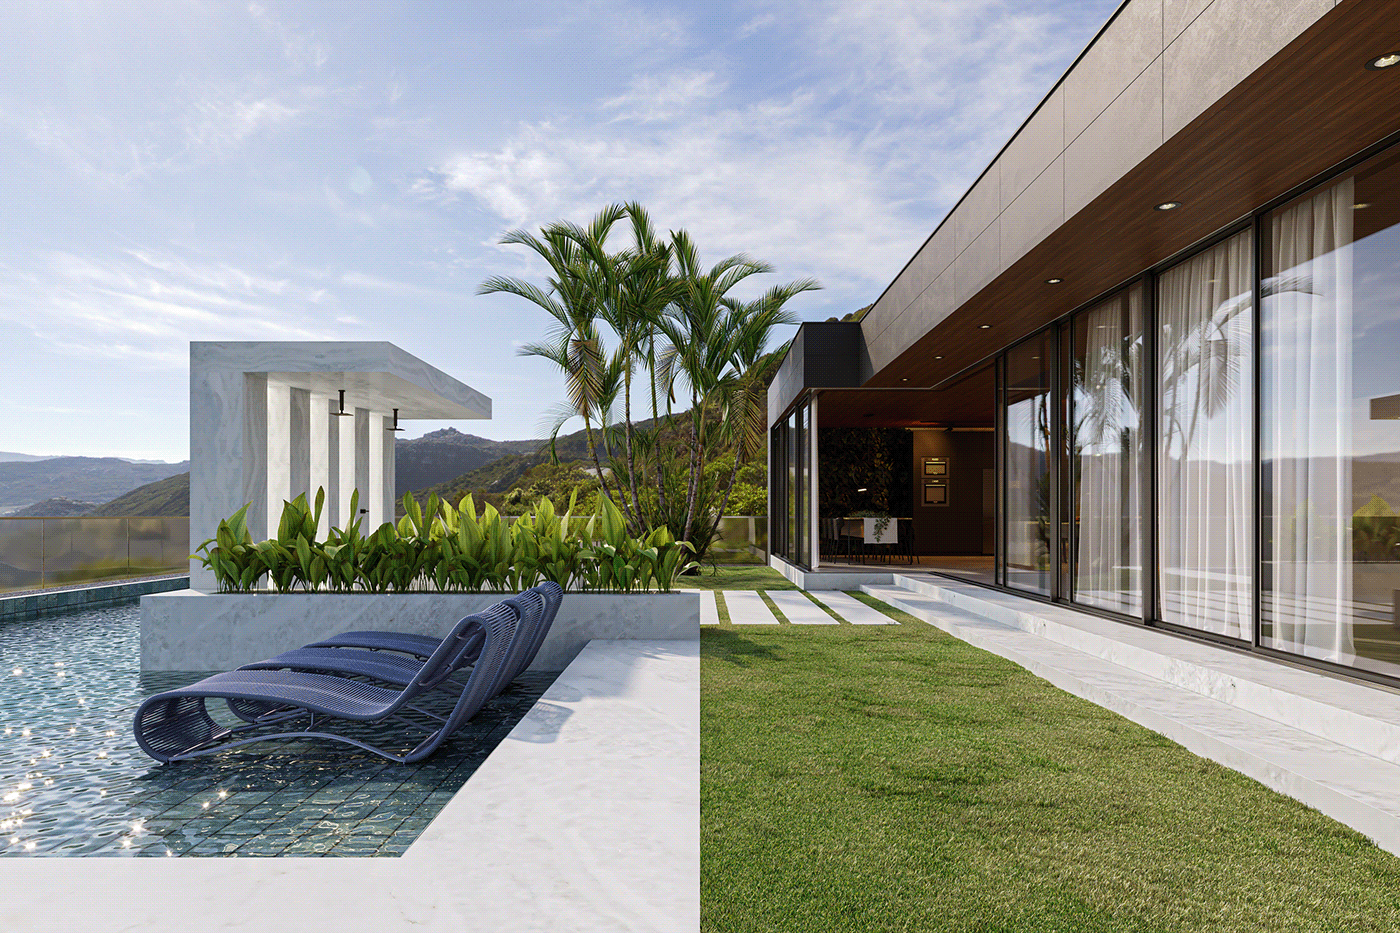 3dsmax architecture corona render  image3D interior design  Marble NATURALSTONE rock stones